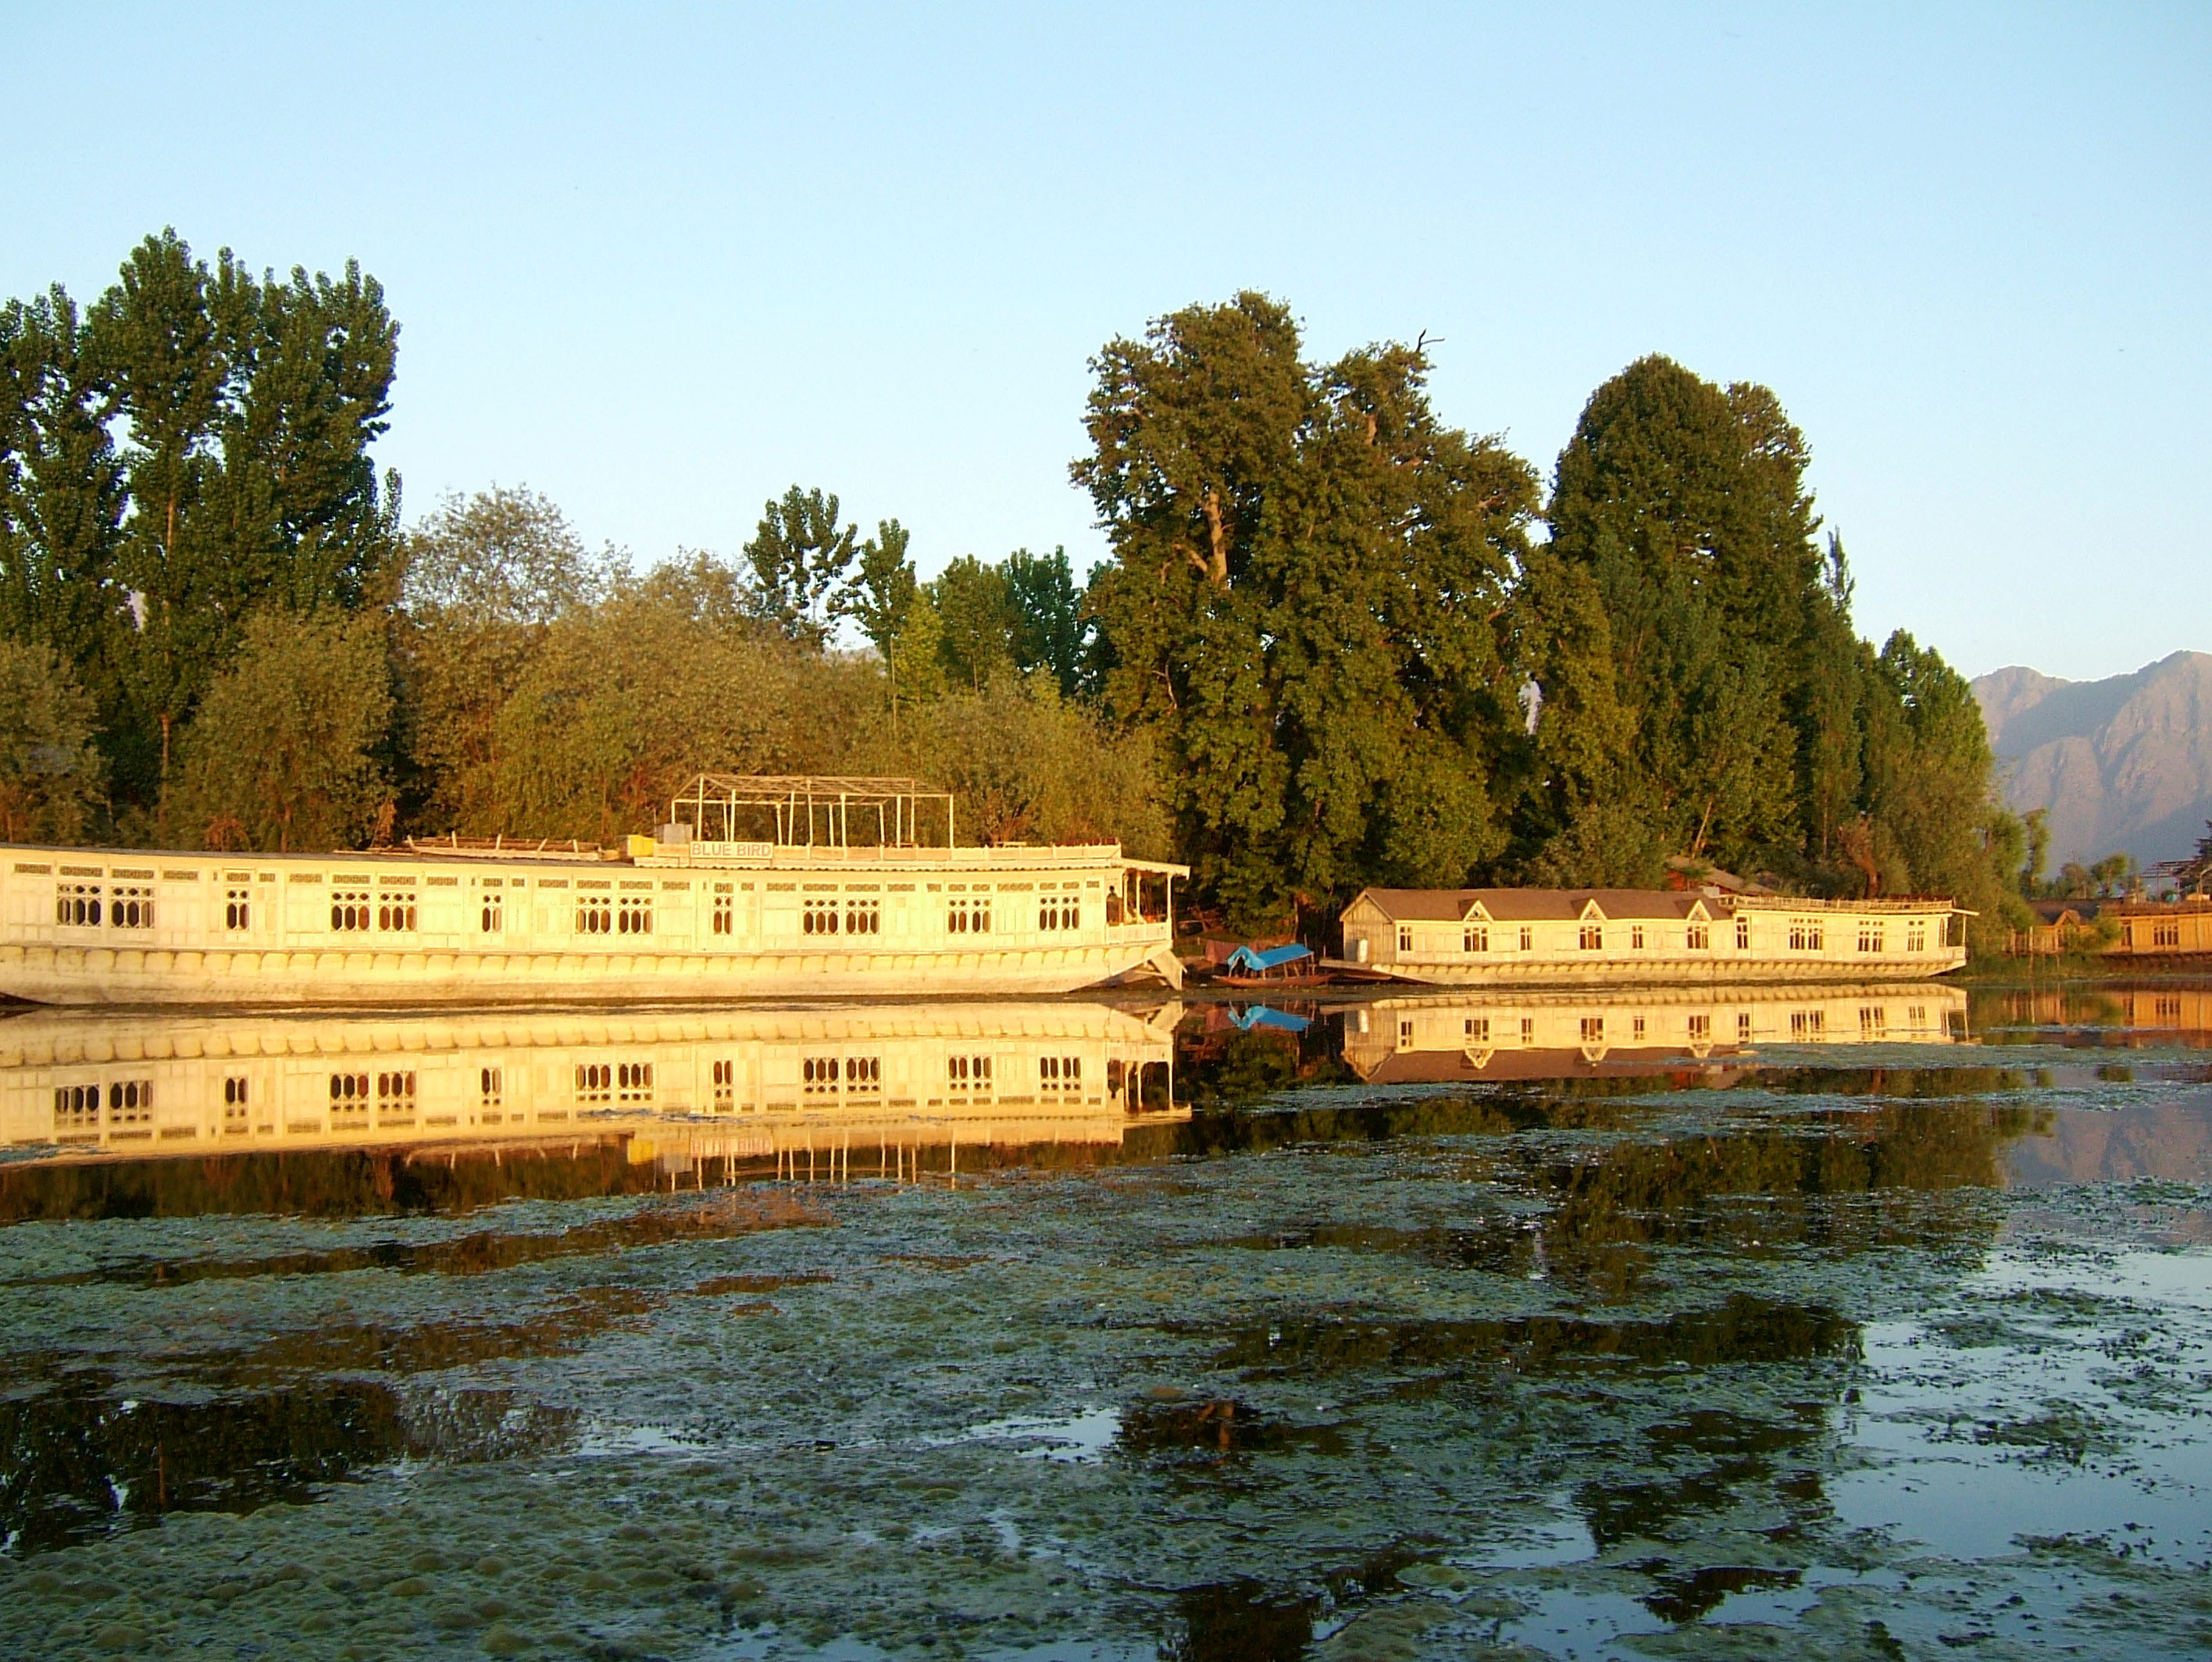 Kashmir houseboats Srinagar Dal lake India Apr 2004 06